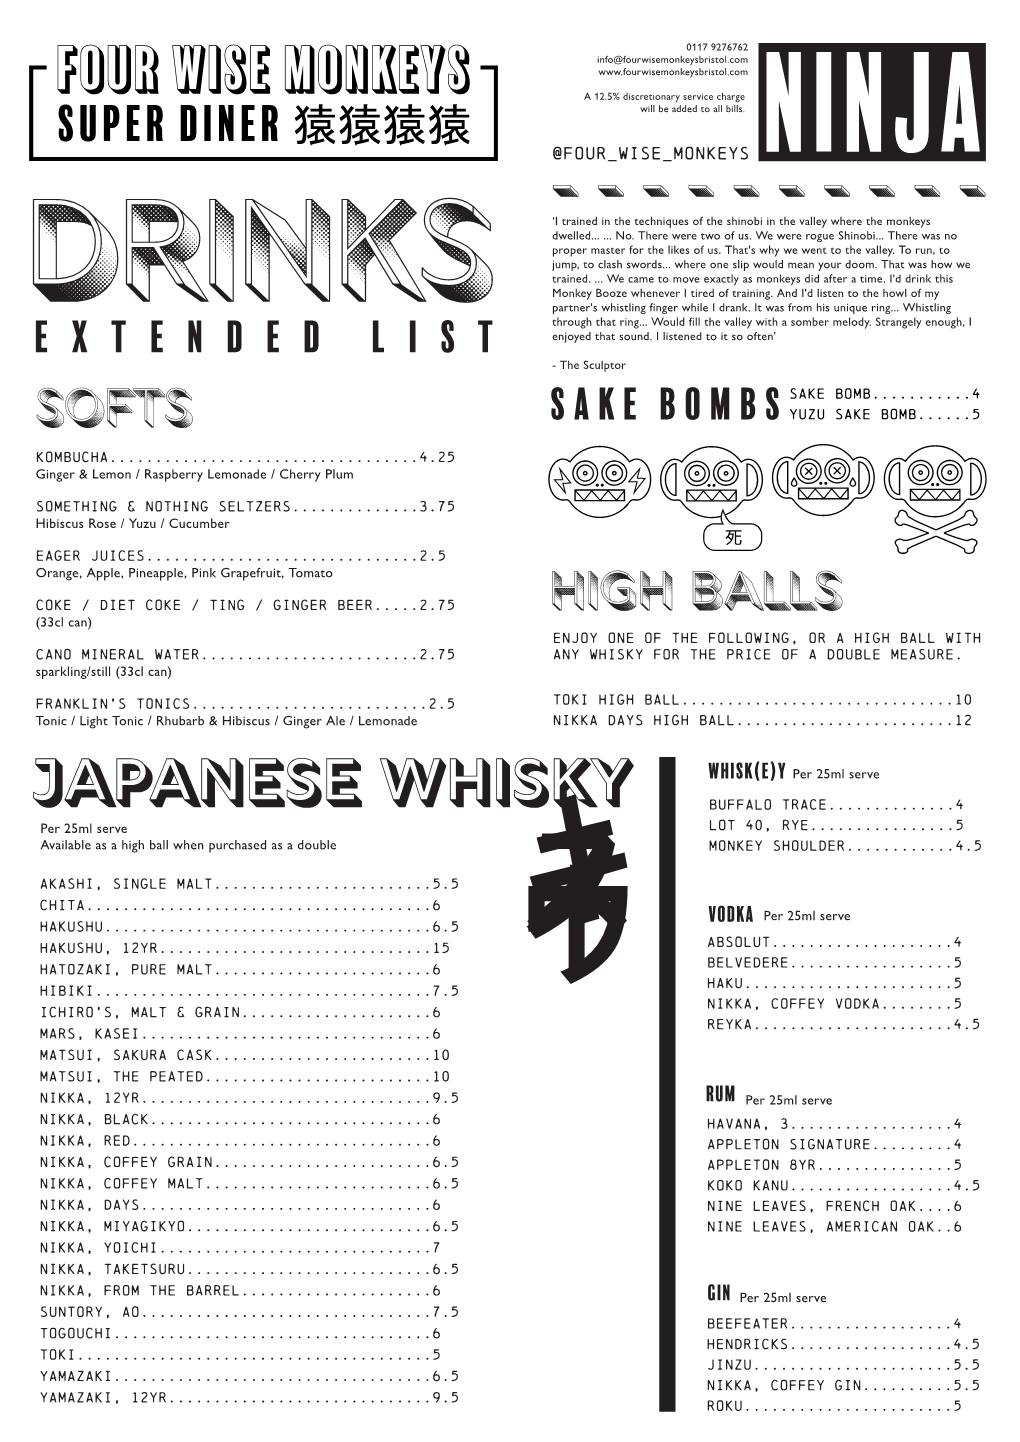 Japanese Whisky Buffalo Trace